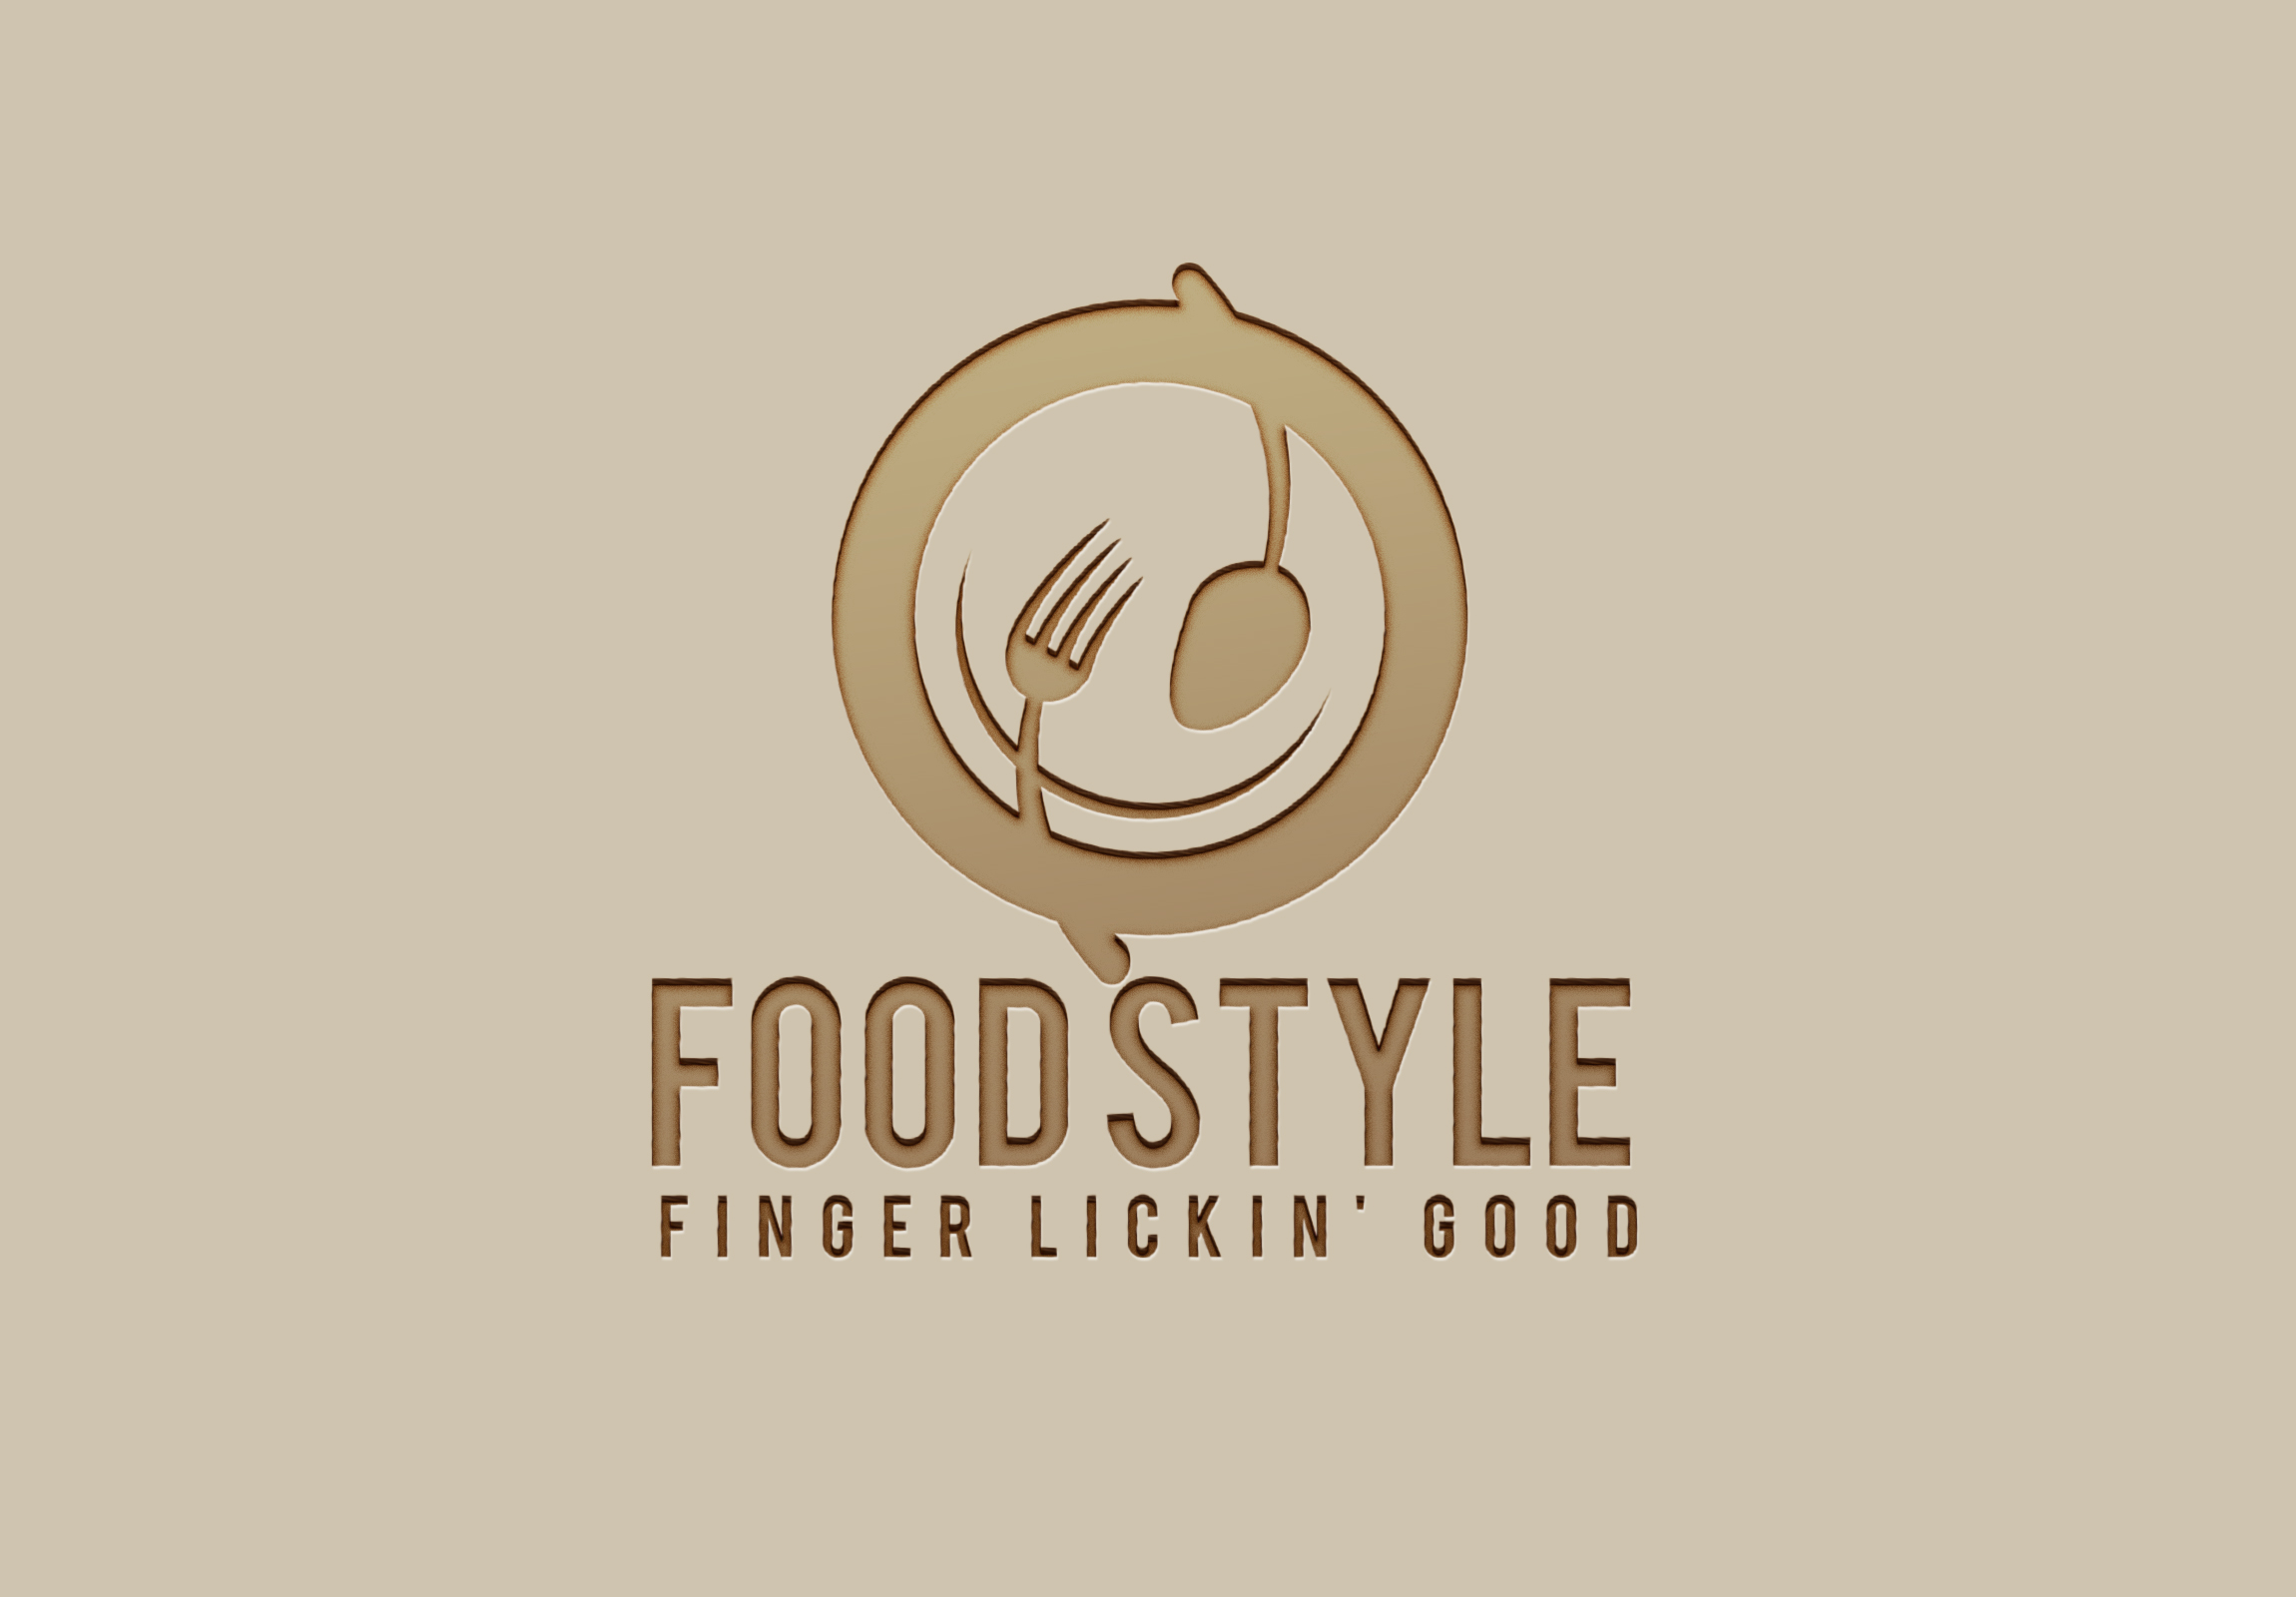 Design Seafood Fast Food Restaurant Food Blog Business Logo For Seoclerks